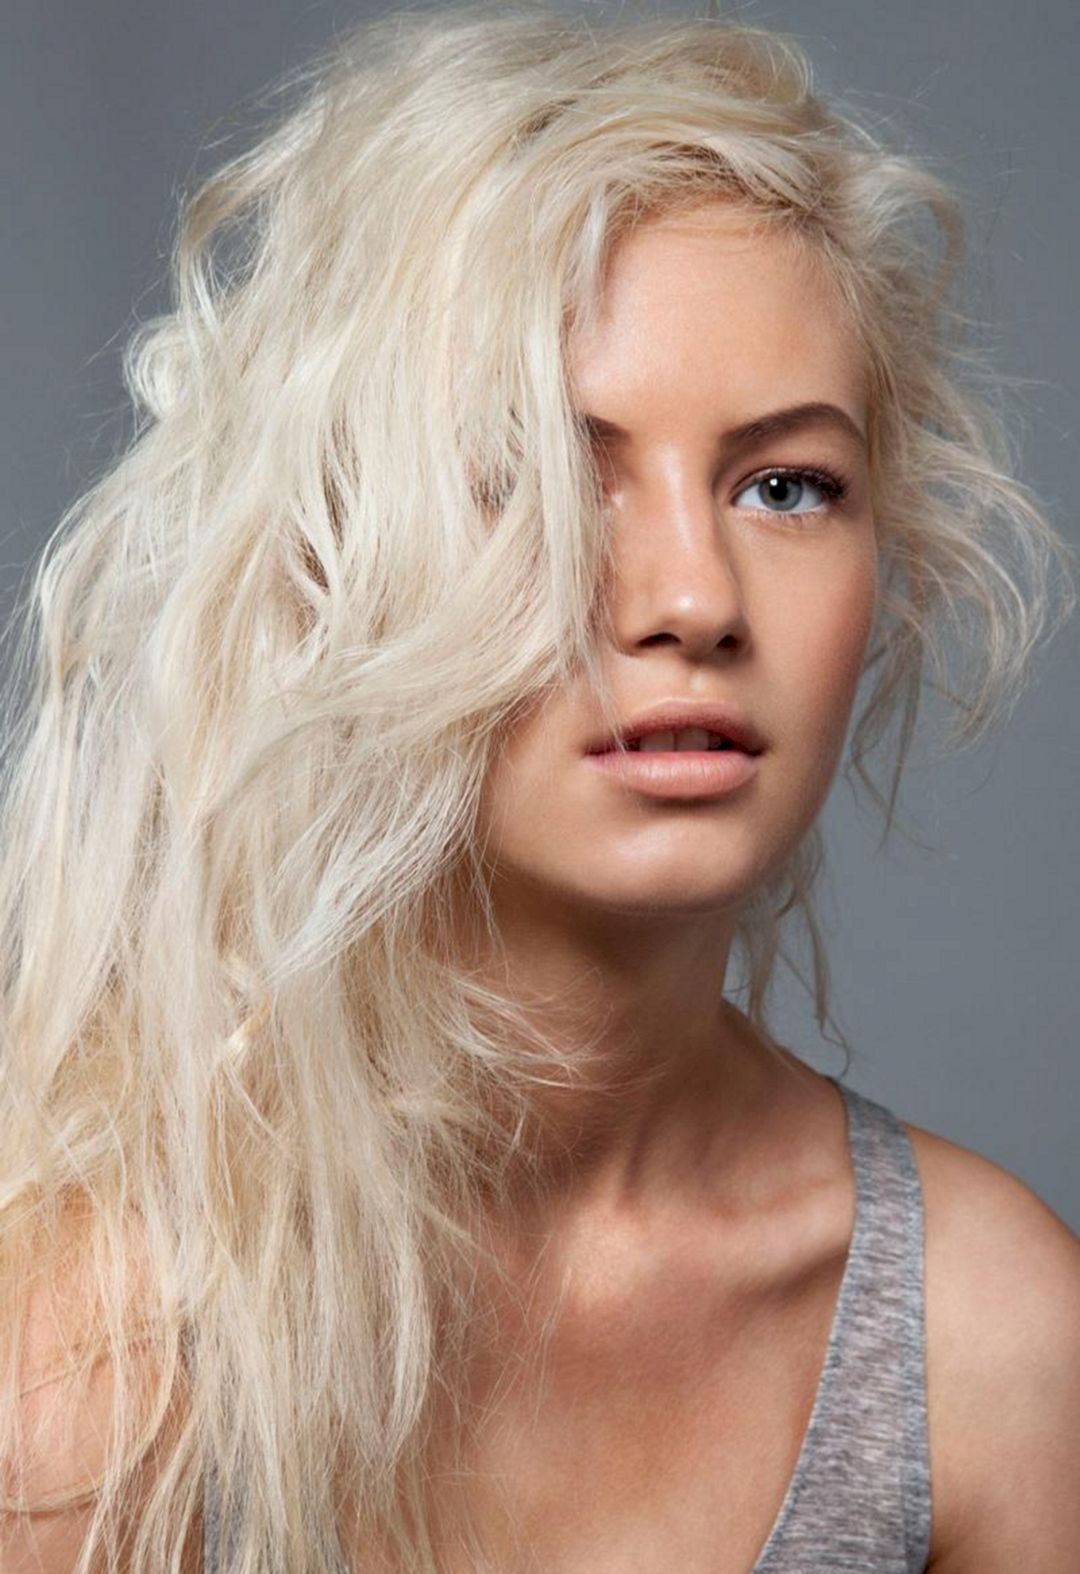 Nordic white hair model from haaregram